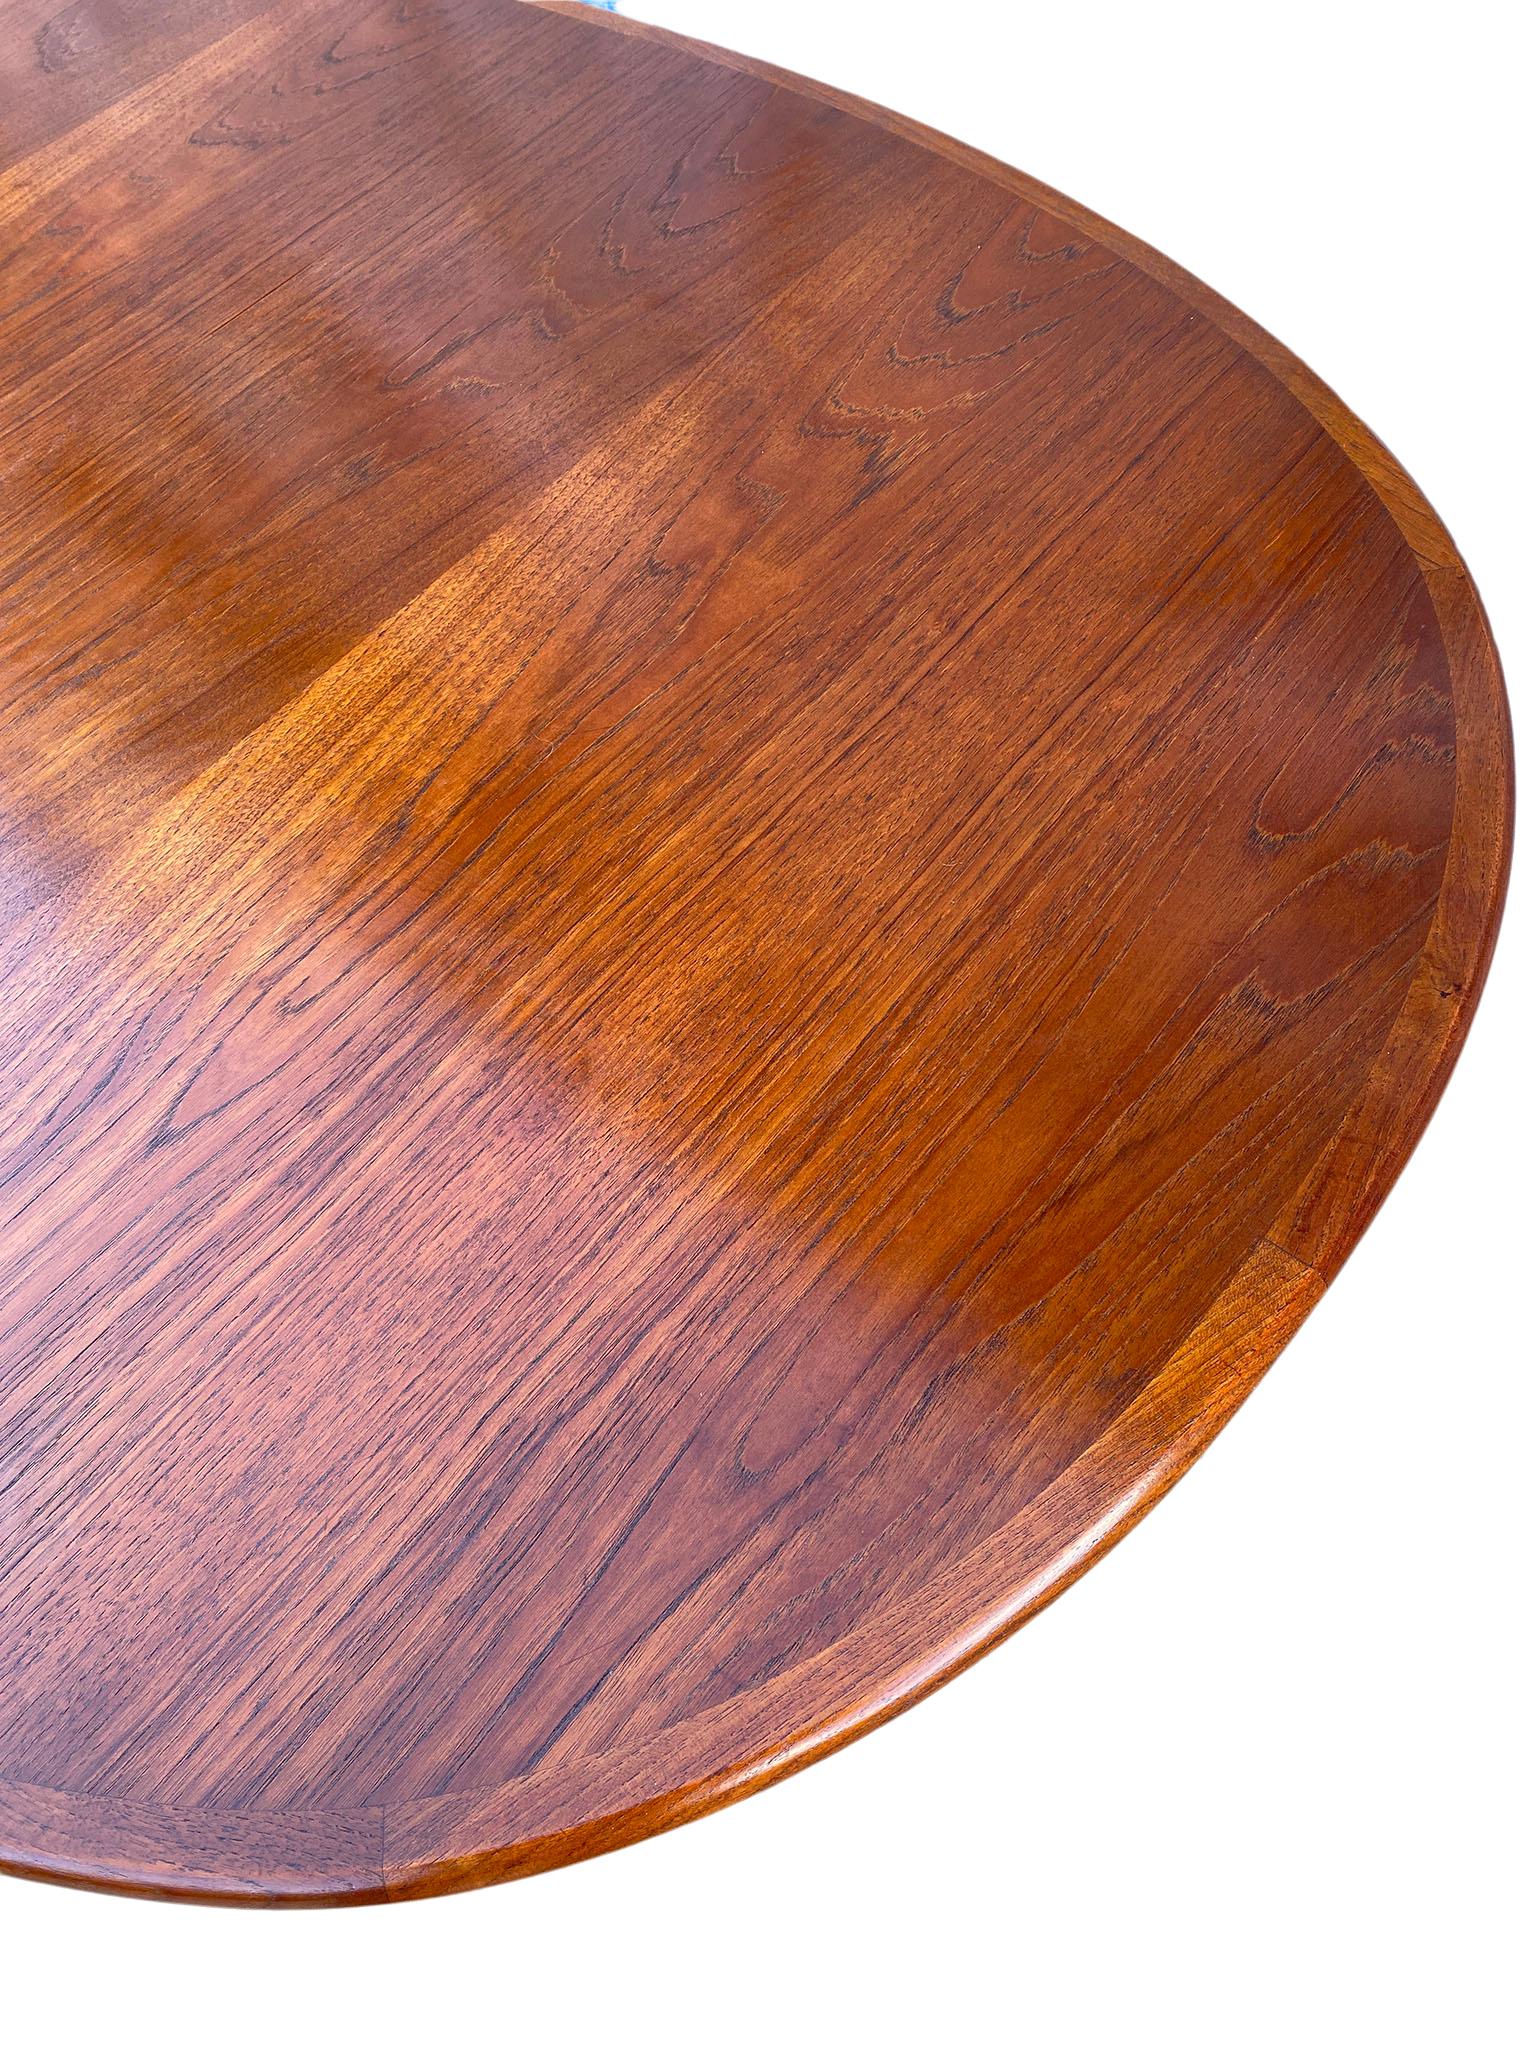 Midcentury Elliptical Large Oval Danish Teak Expandable Dining Table '3' Leaves 1